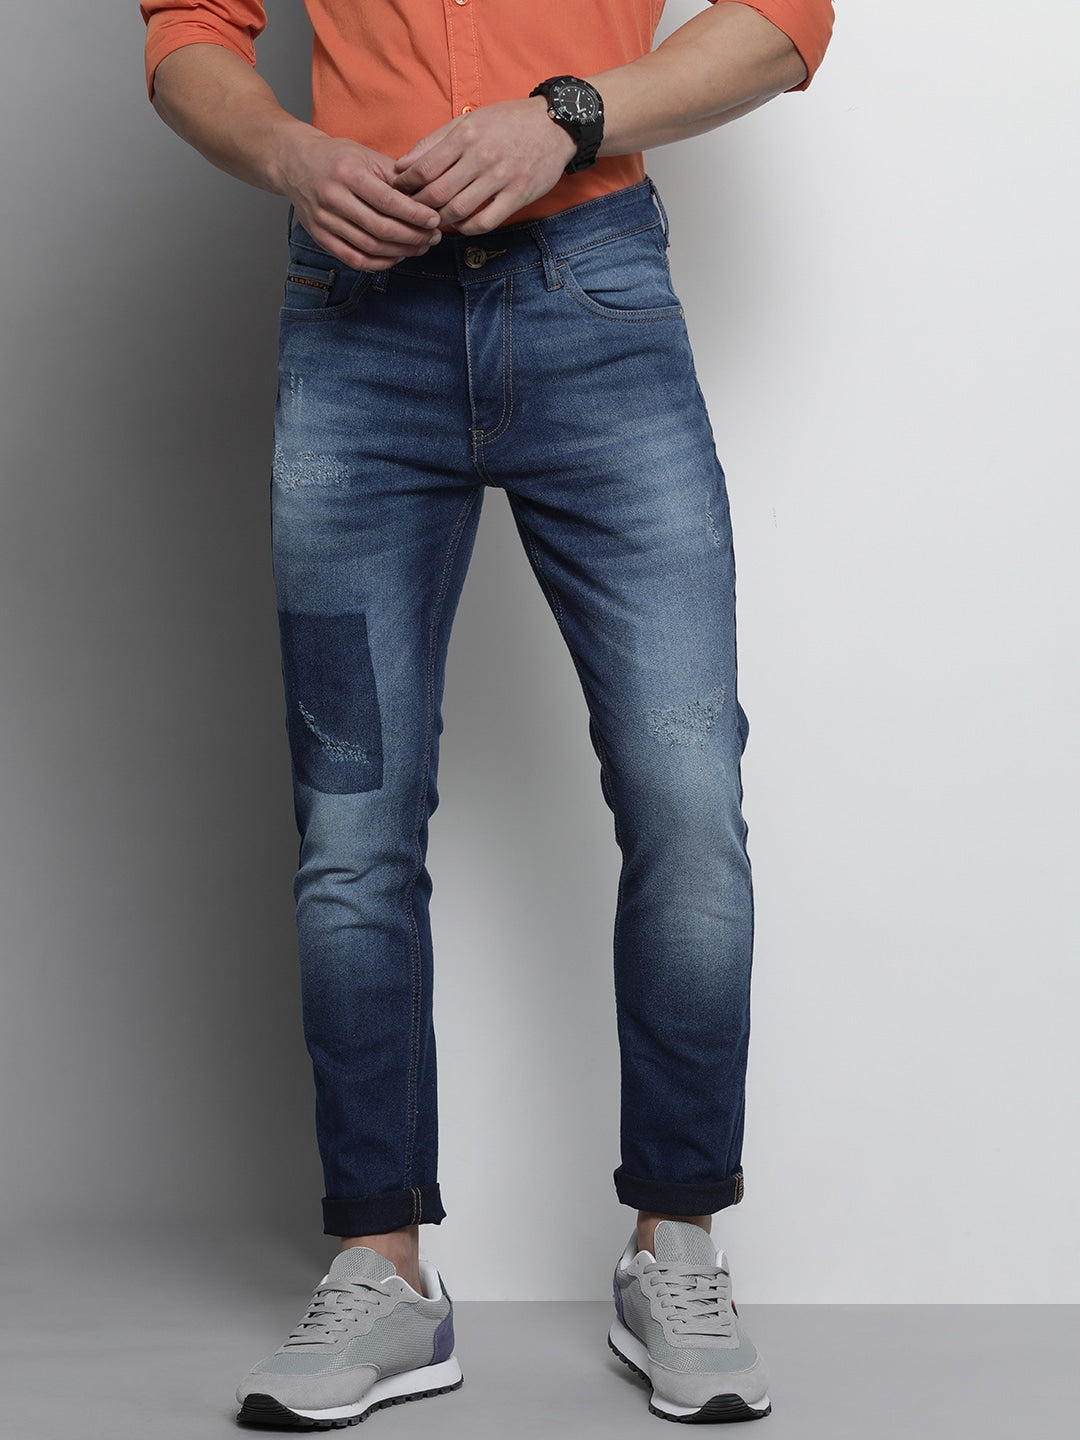 Shop Men Slim Fit Jeans Online.